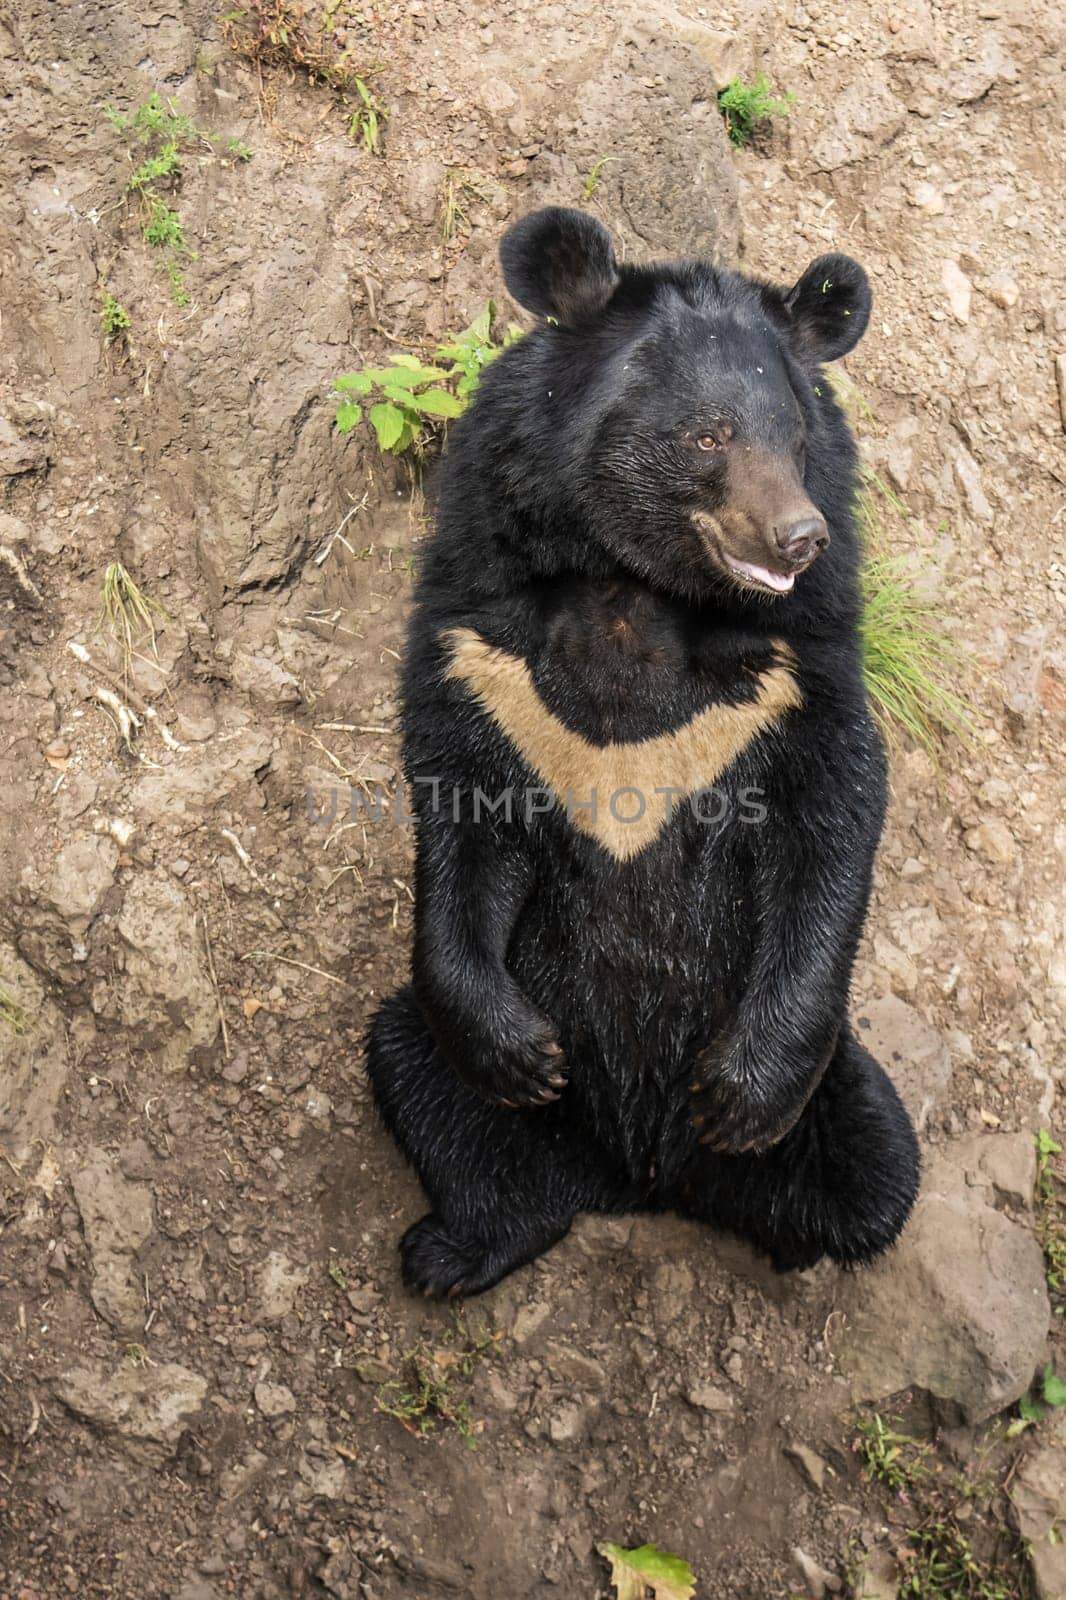 himalayan bear sitting on the ground